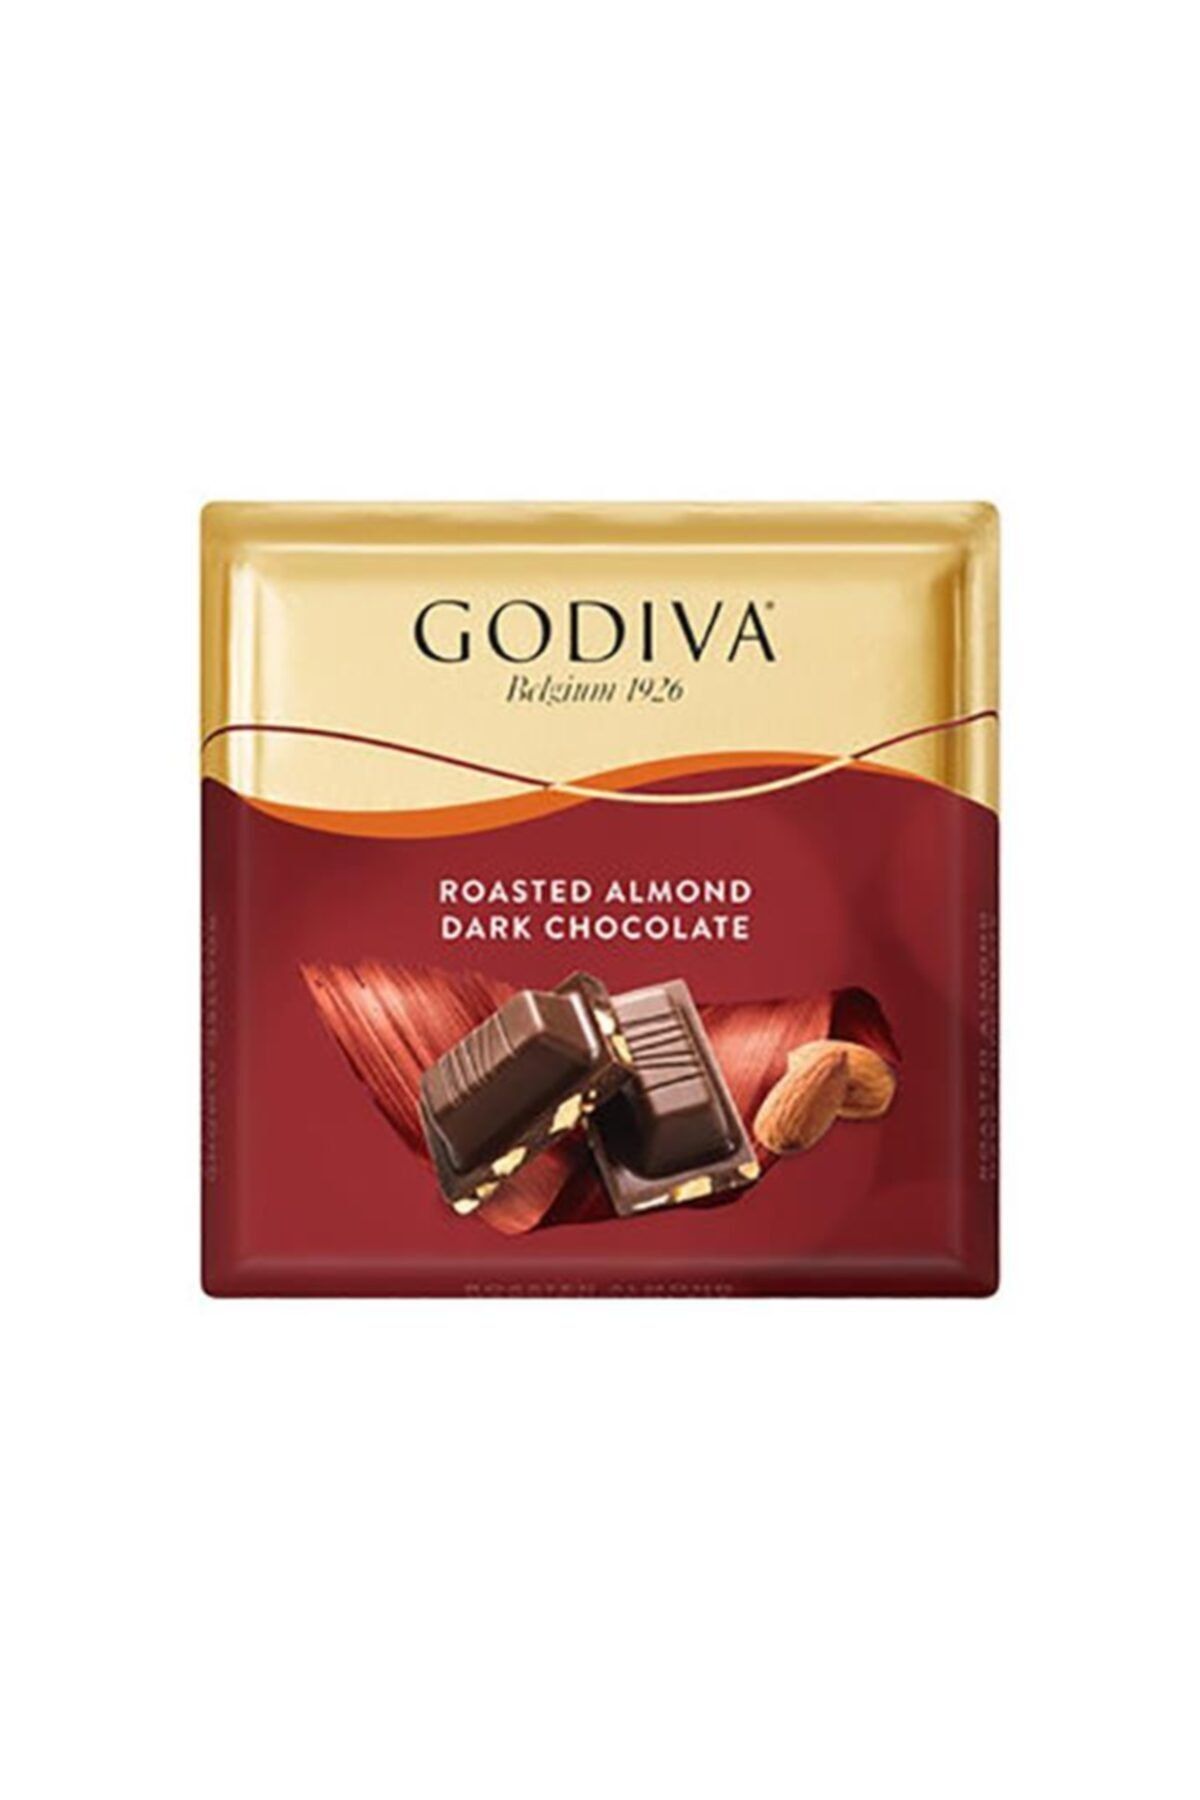 Godiva Bitter Bademli Kare Çikolata 60 gr - 6 Ad